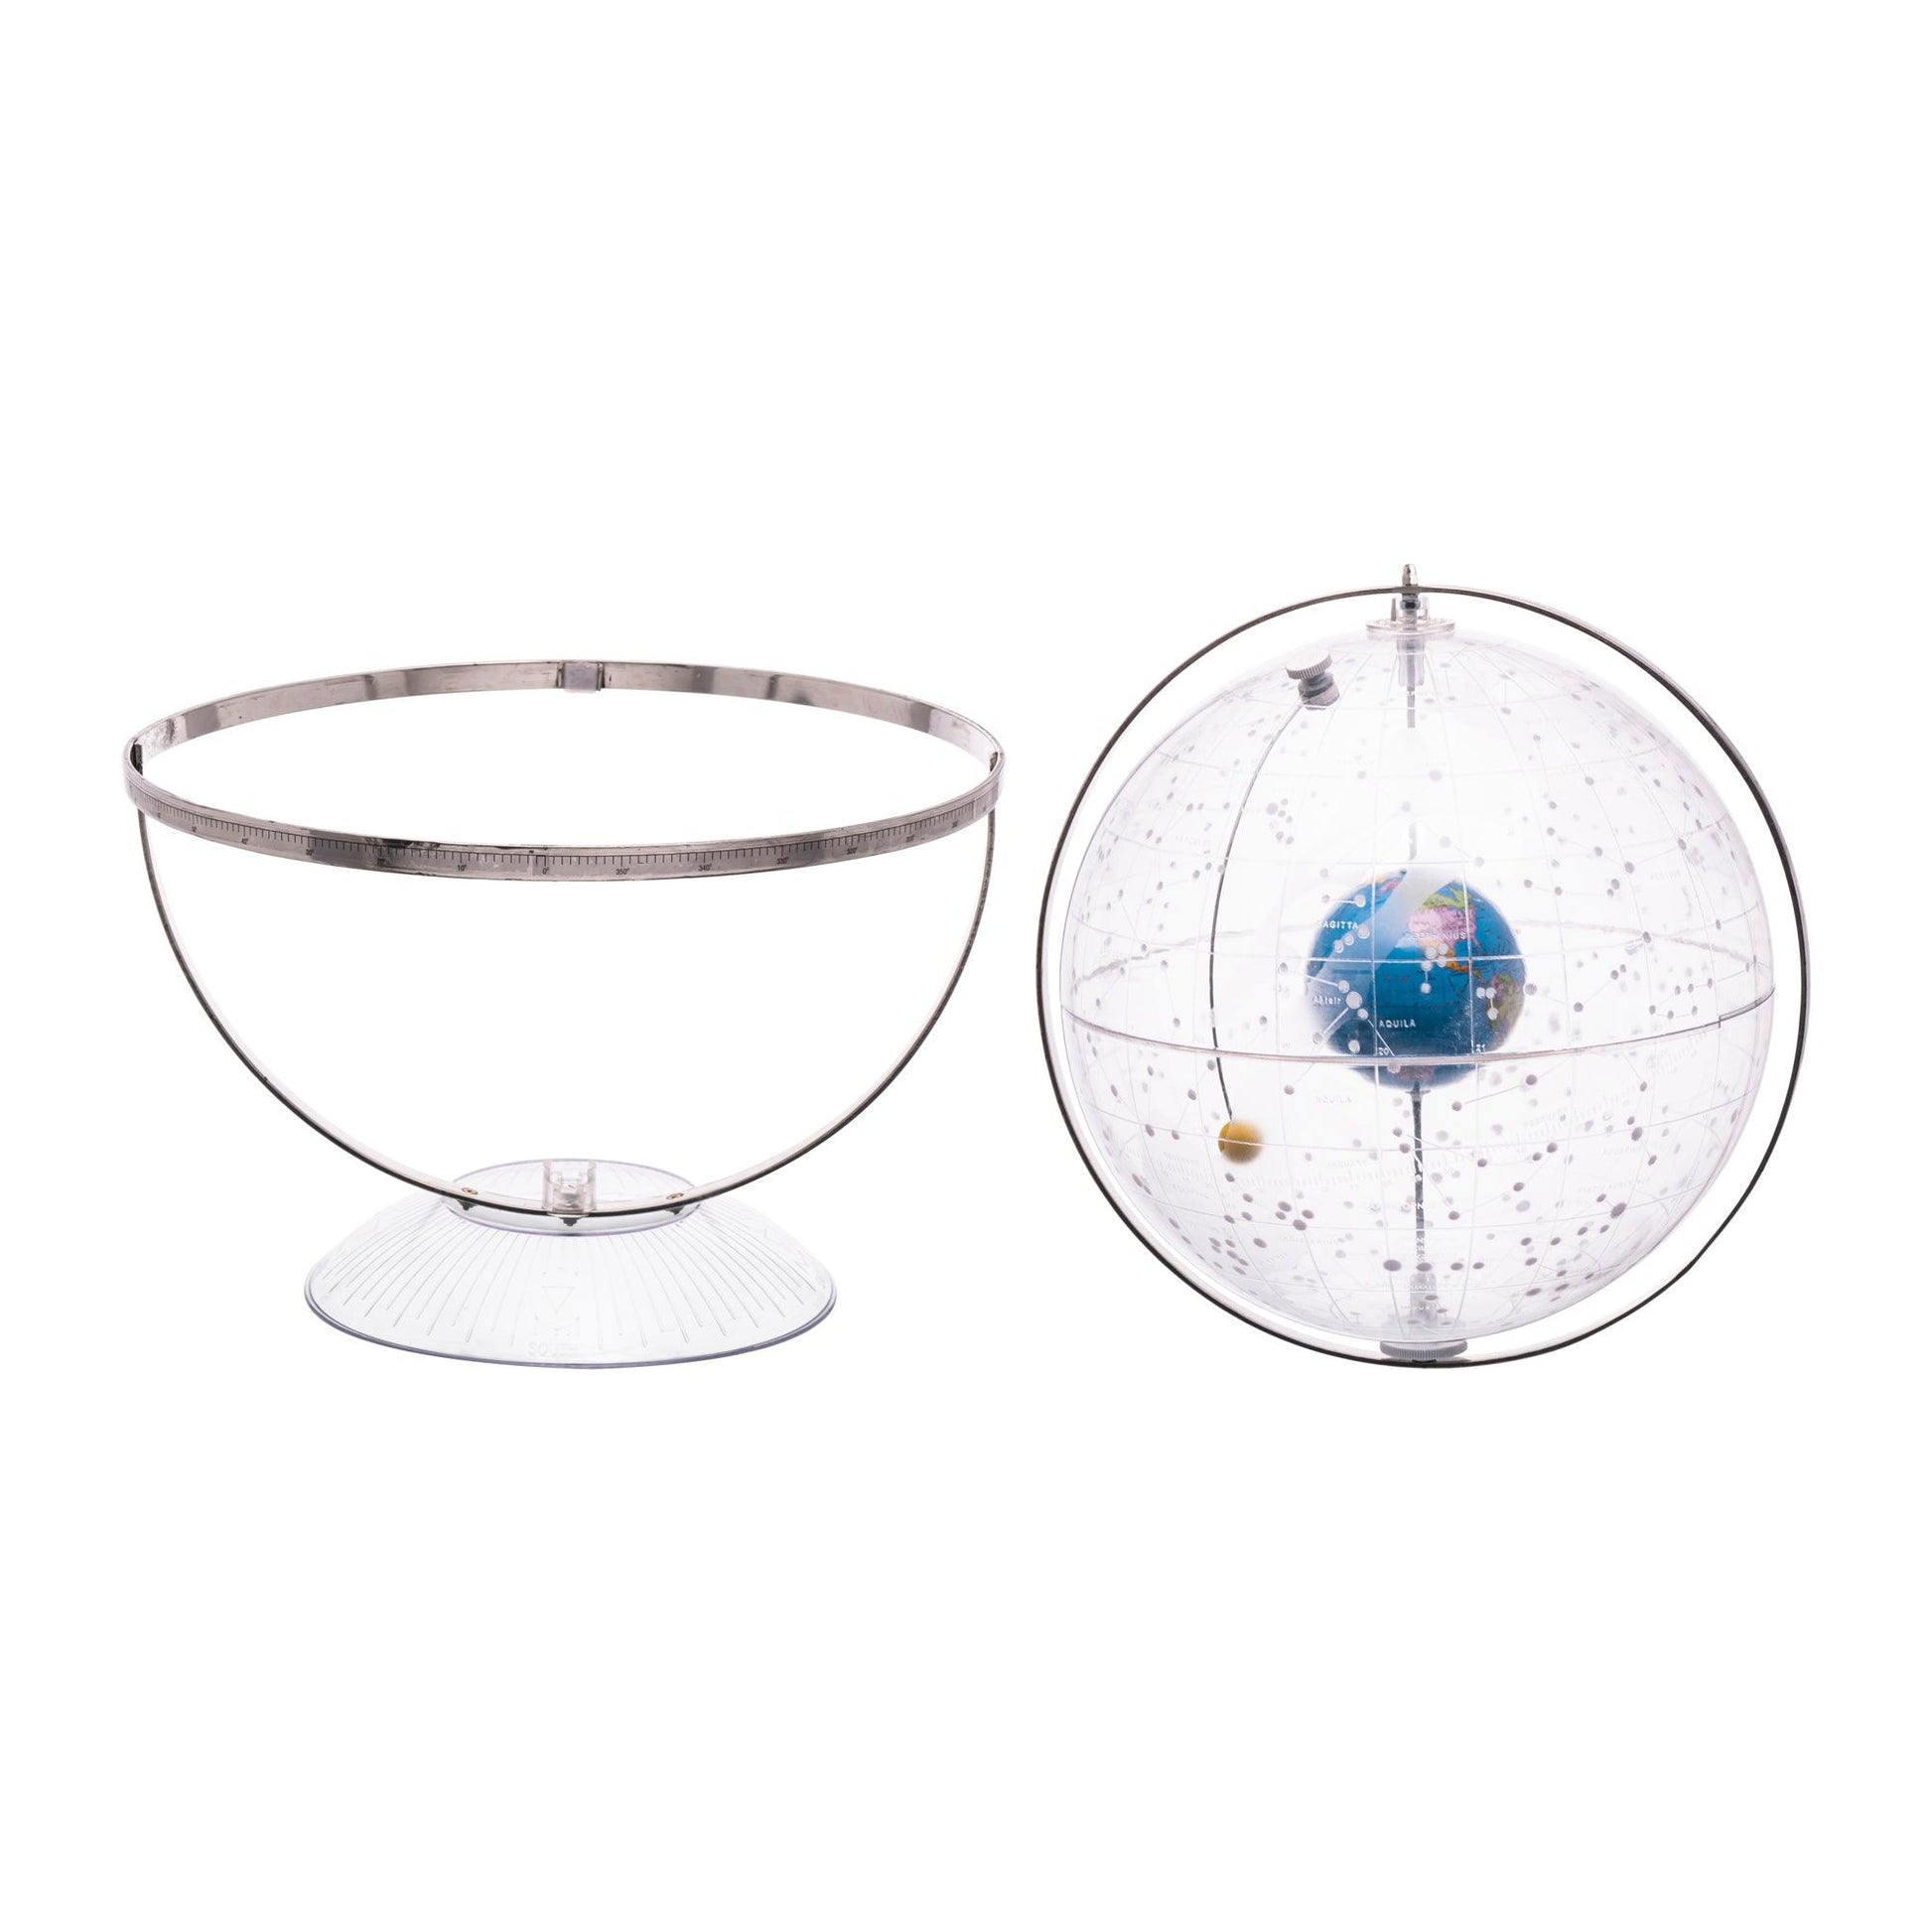 Celestial Globe with Meridian Ring - Loomini